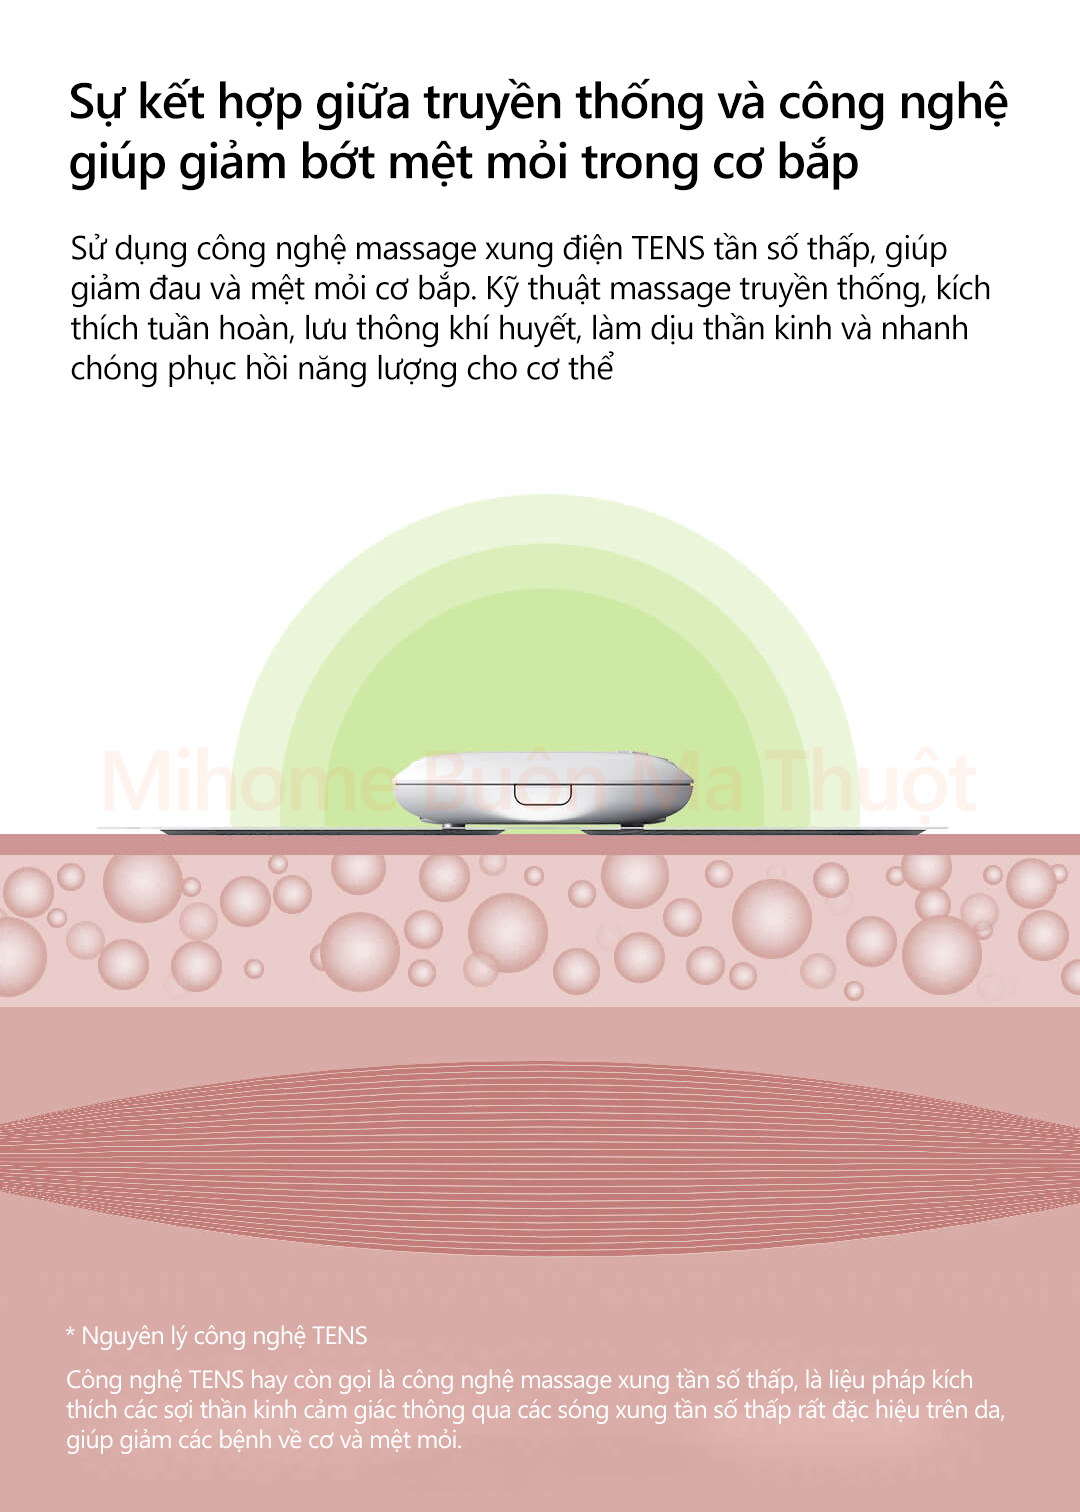 Miếng dán massage mini Leravan LR-H007PURE-GY